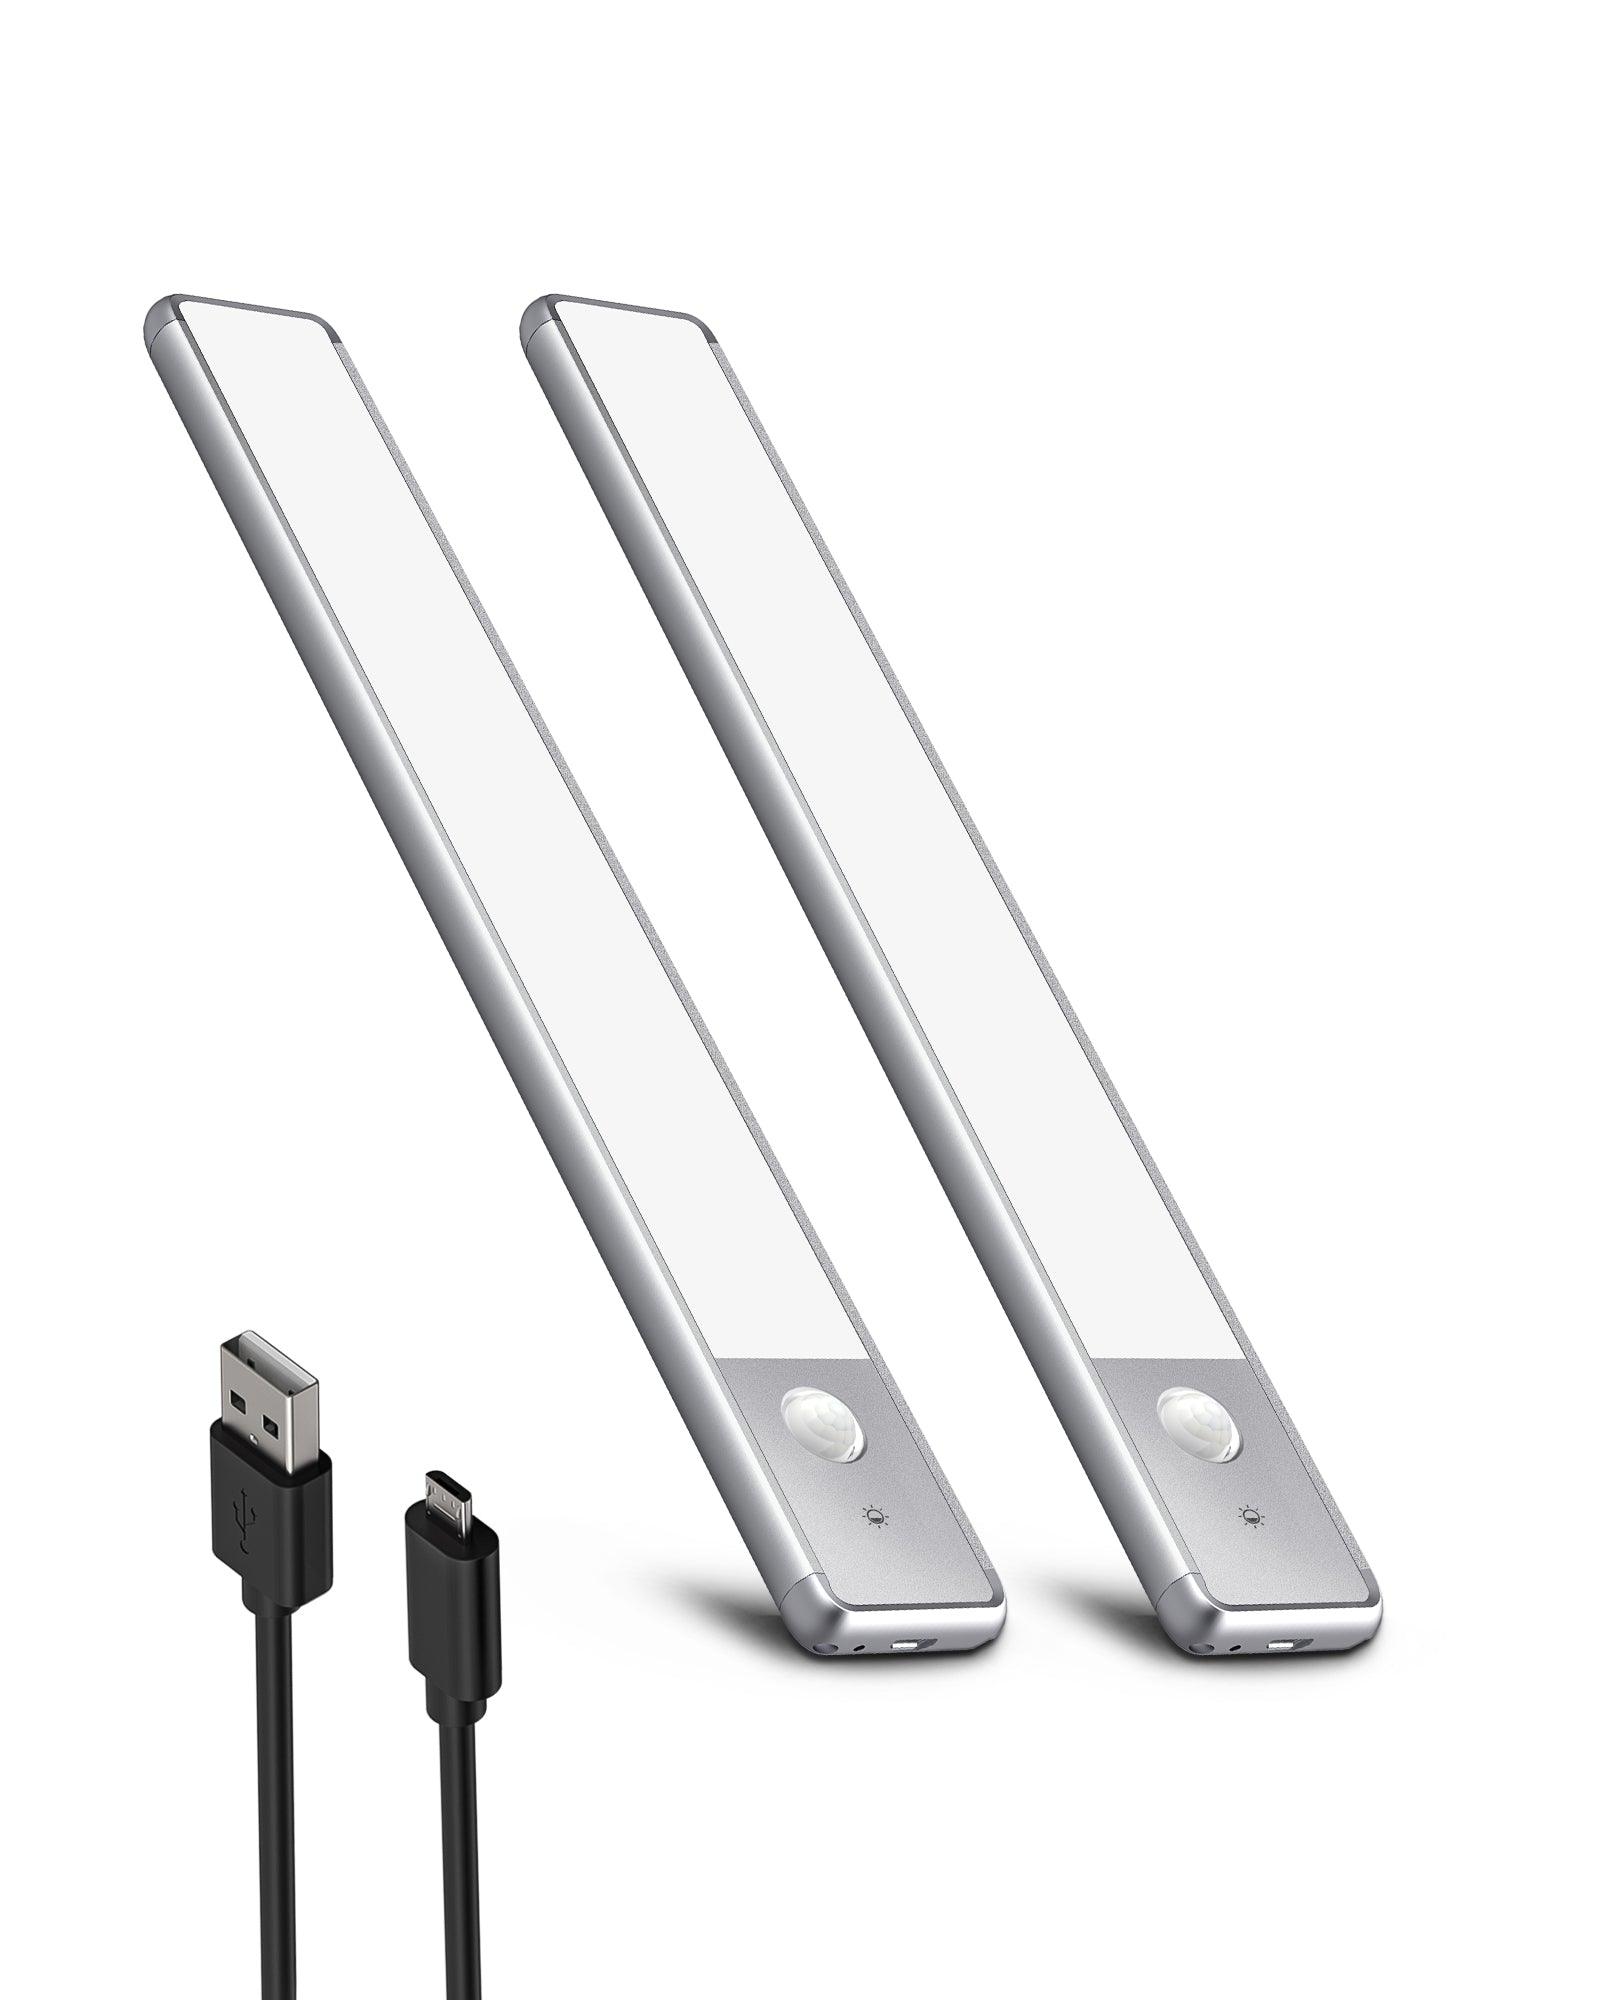 EZVALO LED Closet Light USB Rechargeable Under Cabinet Lightening